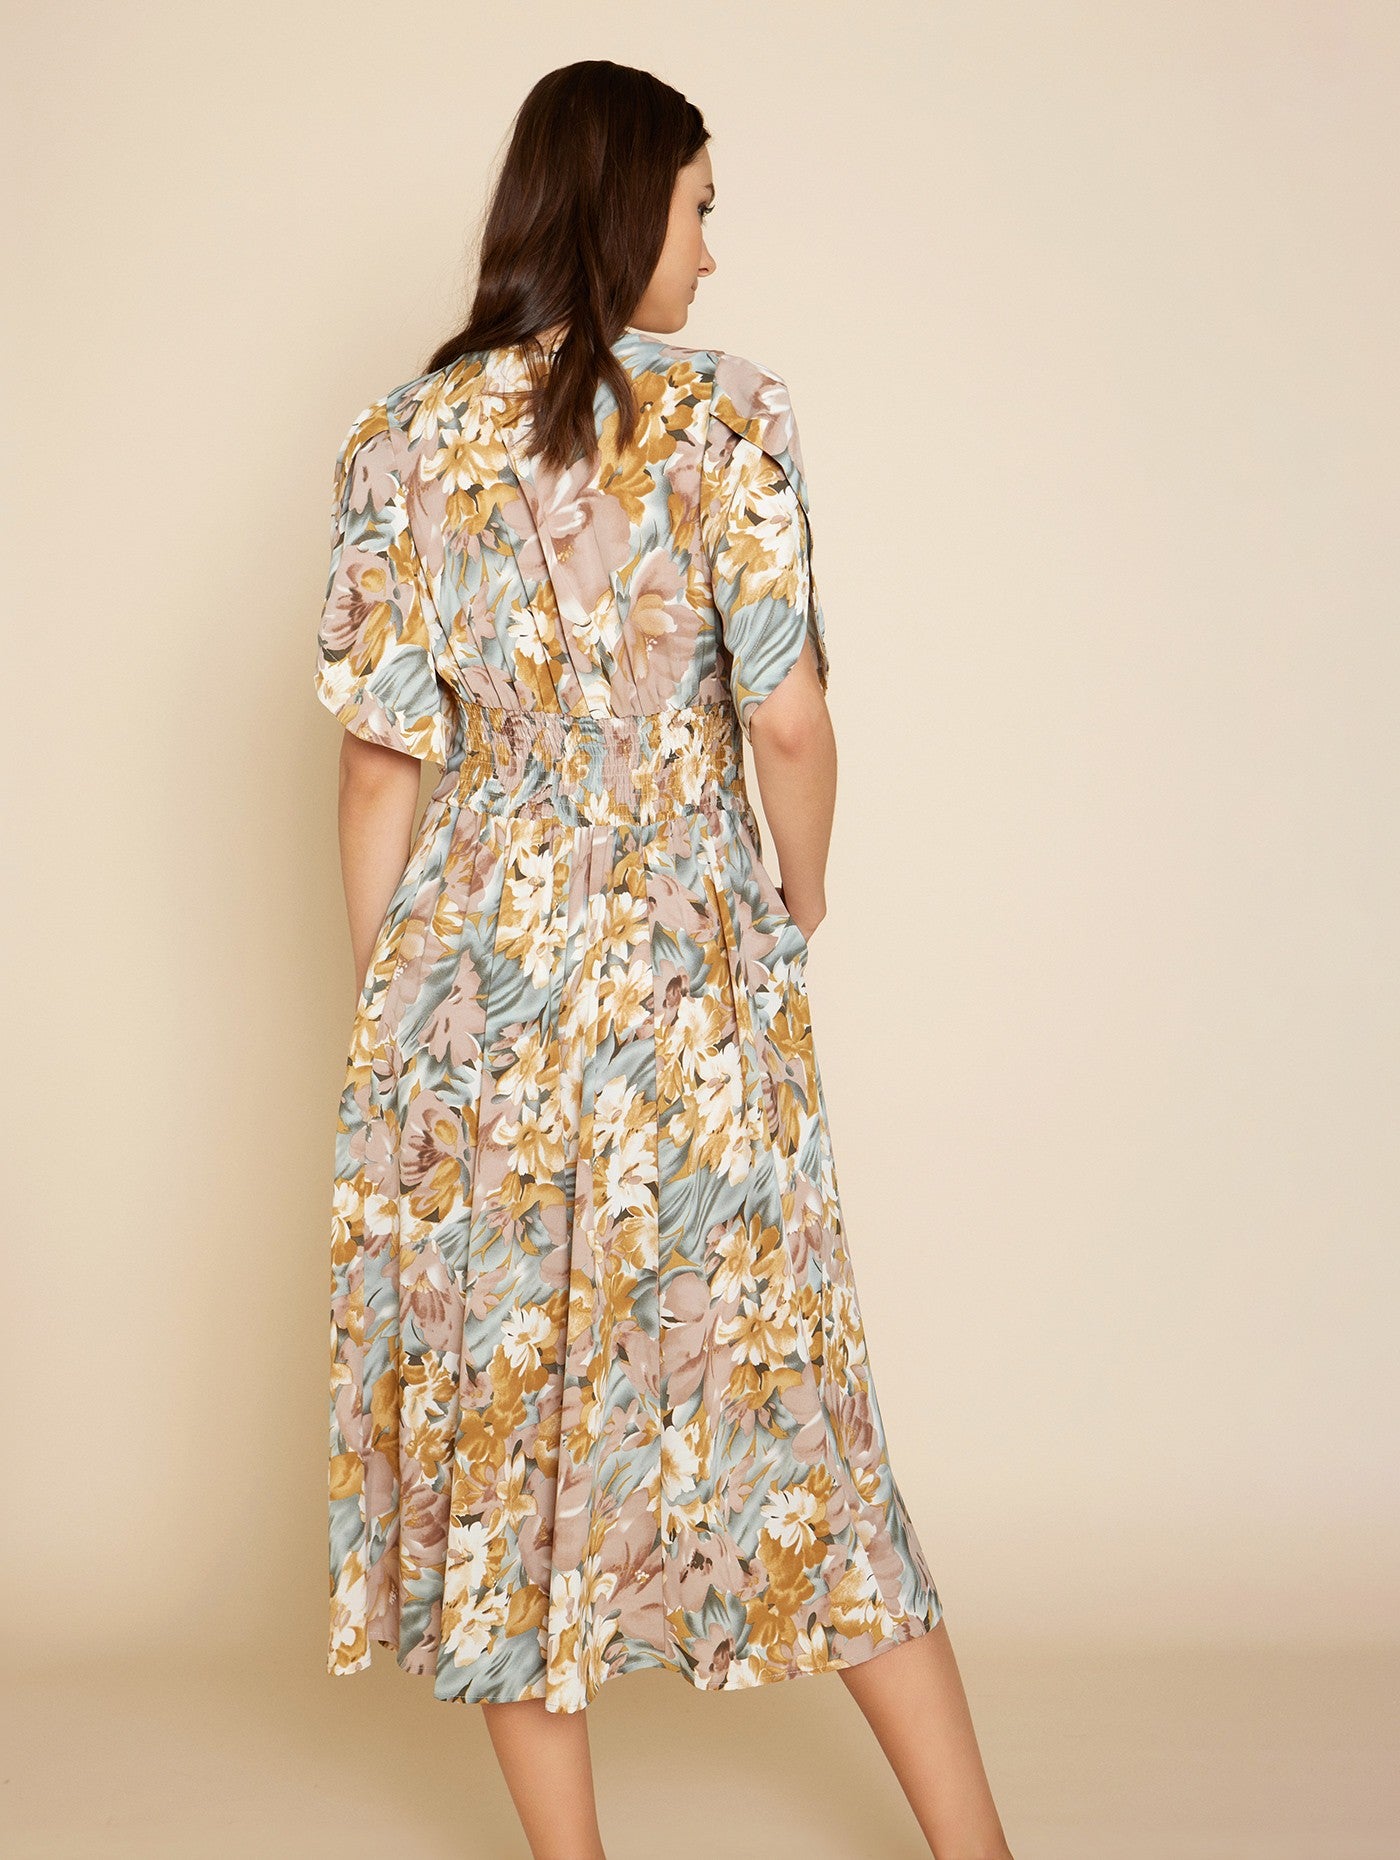 Printed midi dress with pockets